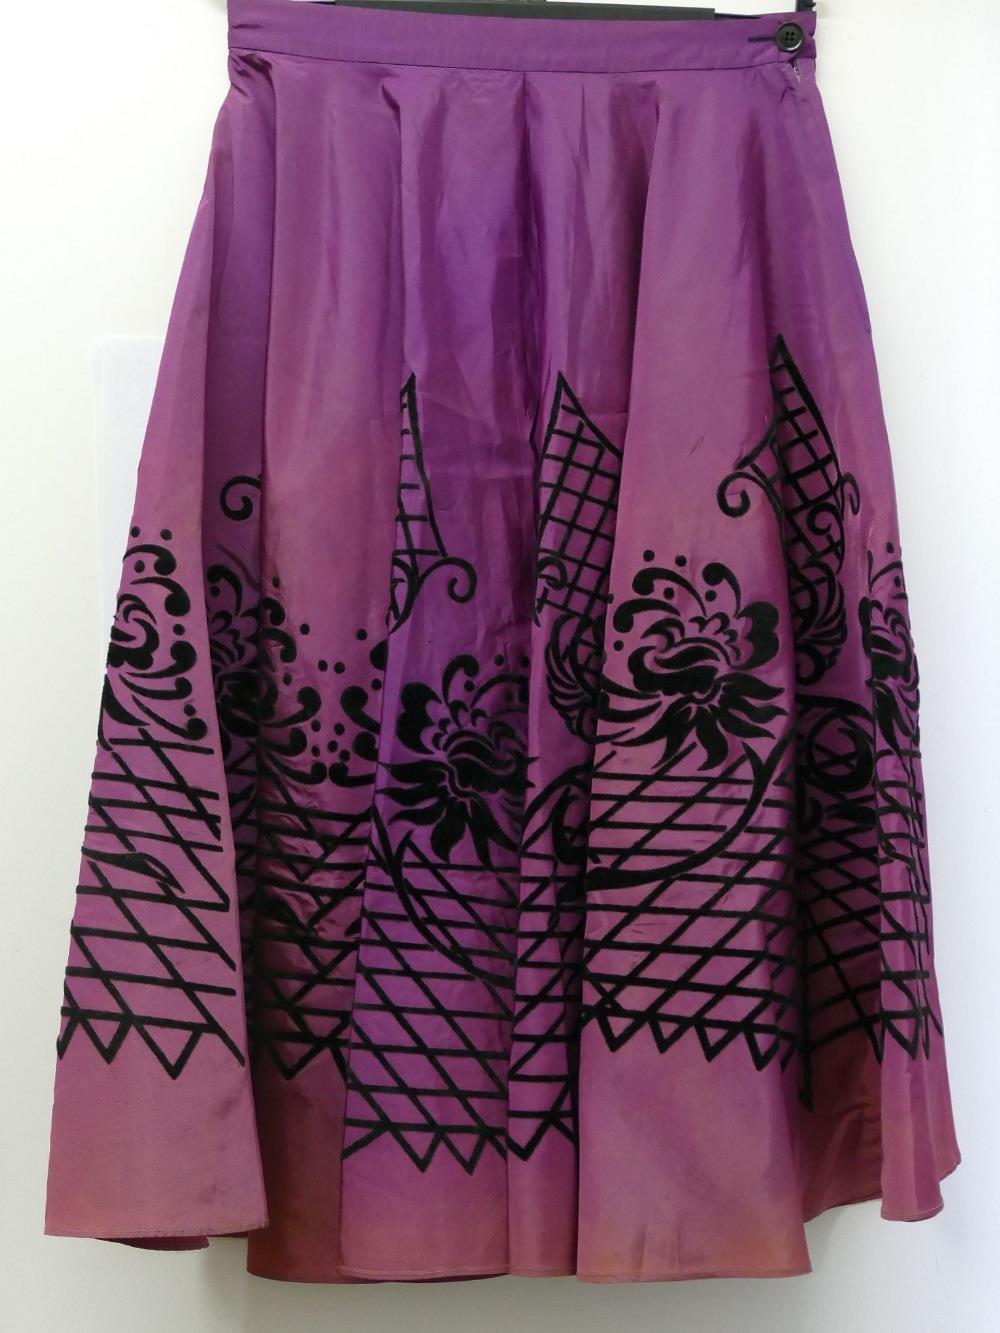 A Sportaville vintage purple satin skirt with black flocked design, a full length silk dress the - Image 3 of 6